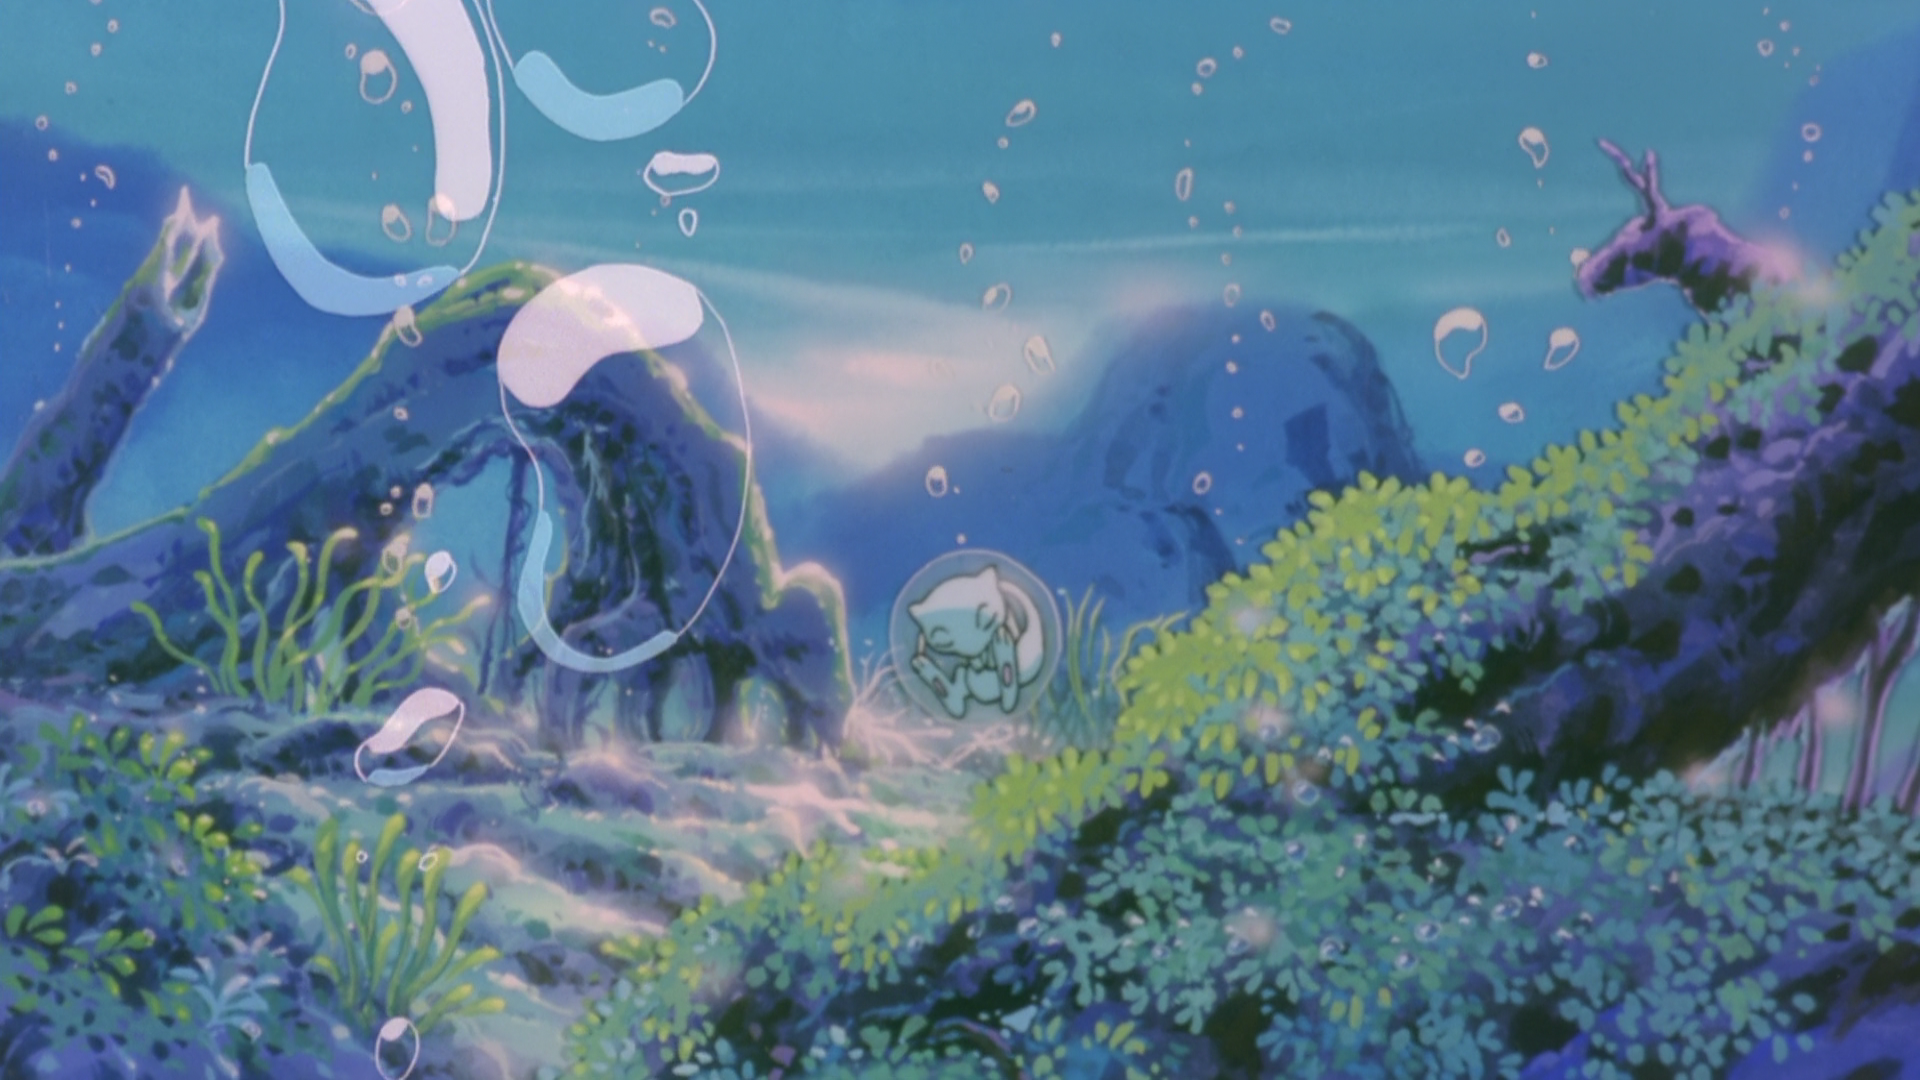 1920x1080 Pokémon: The First Movie Wallpaper Background Image. 